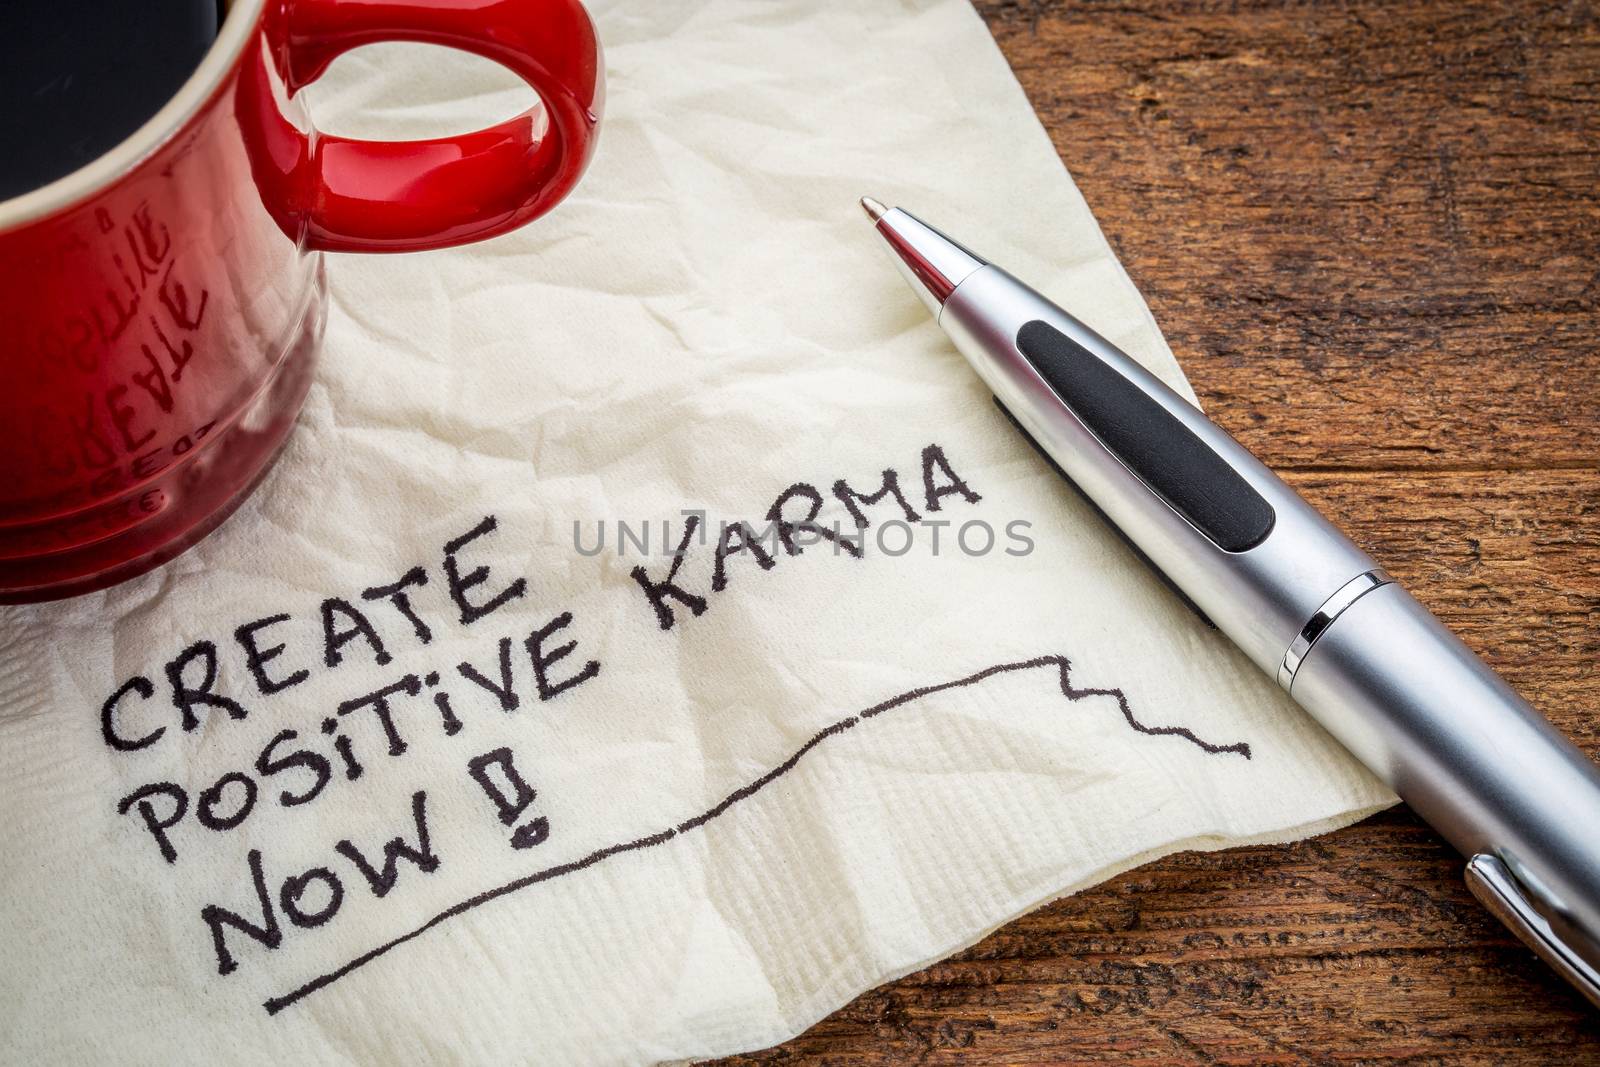 create positive karma - text on napkin by PixelsAway